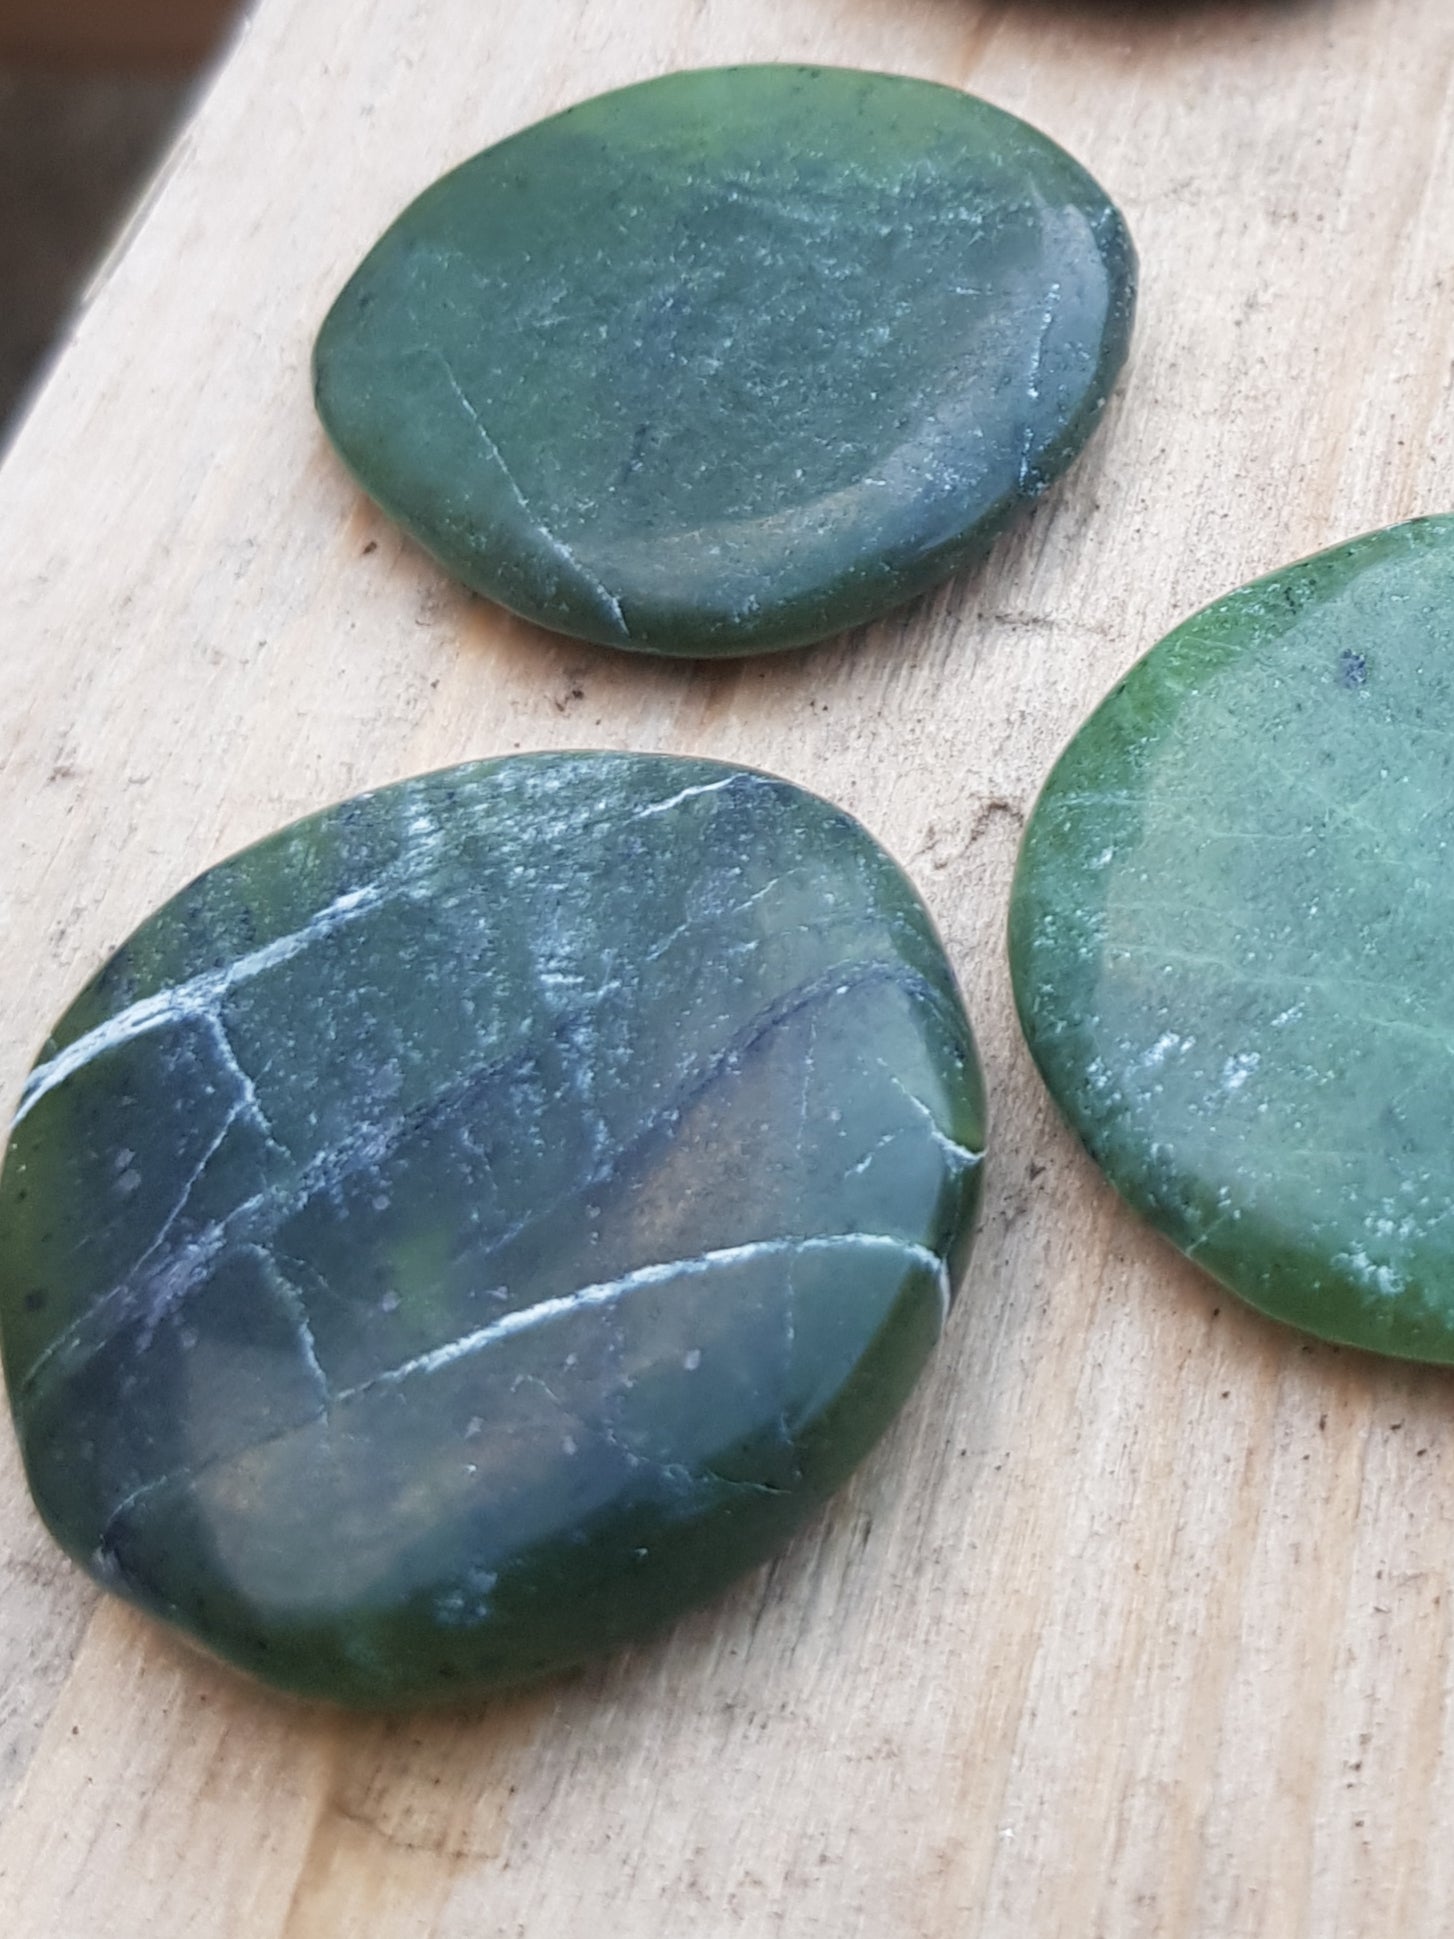 Nephrite jade palmstone - The Science of Magic 